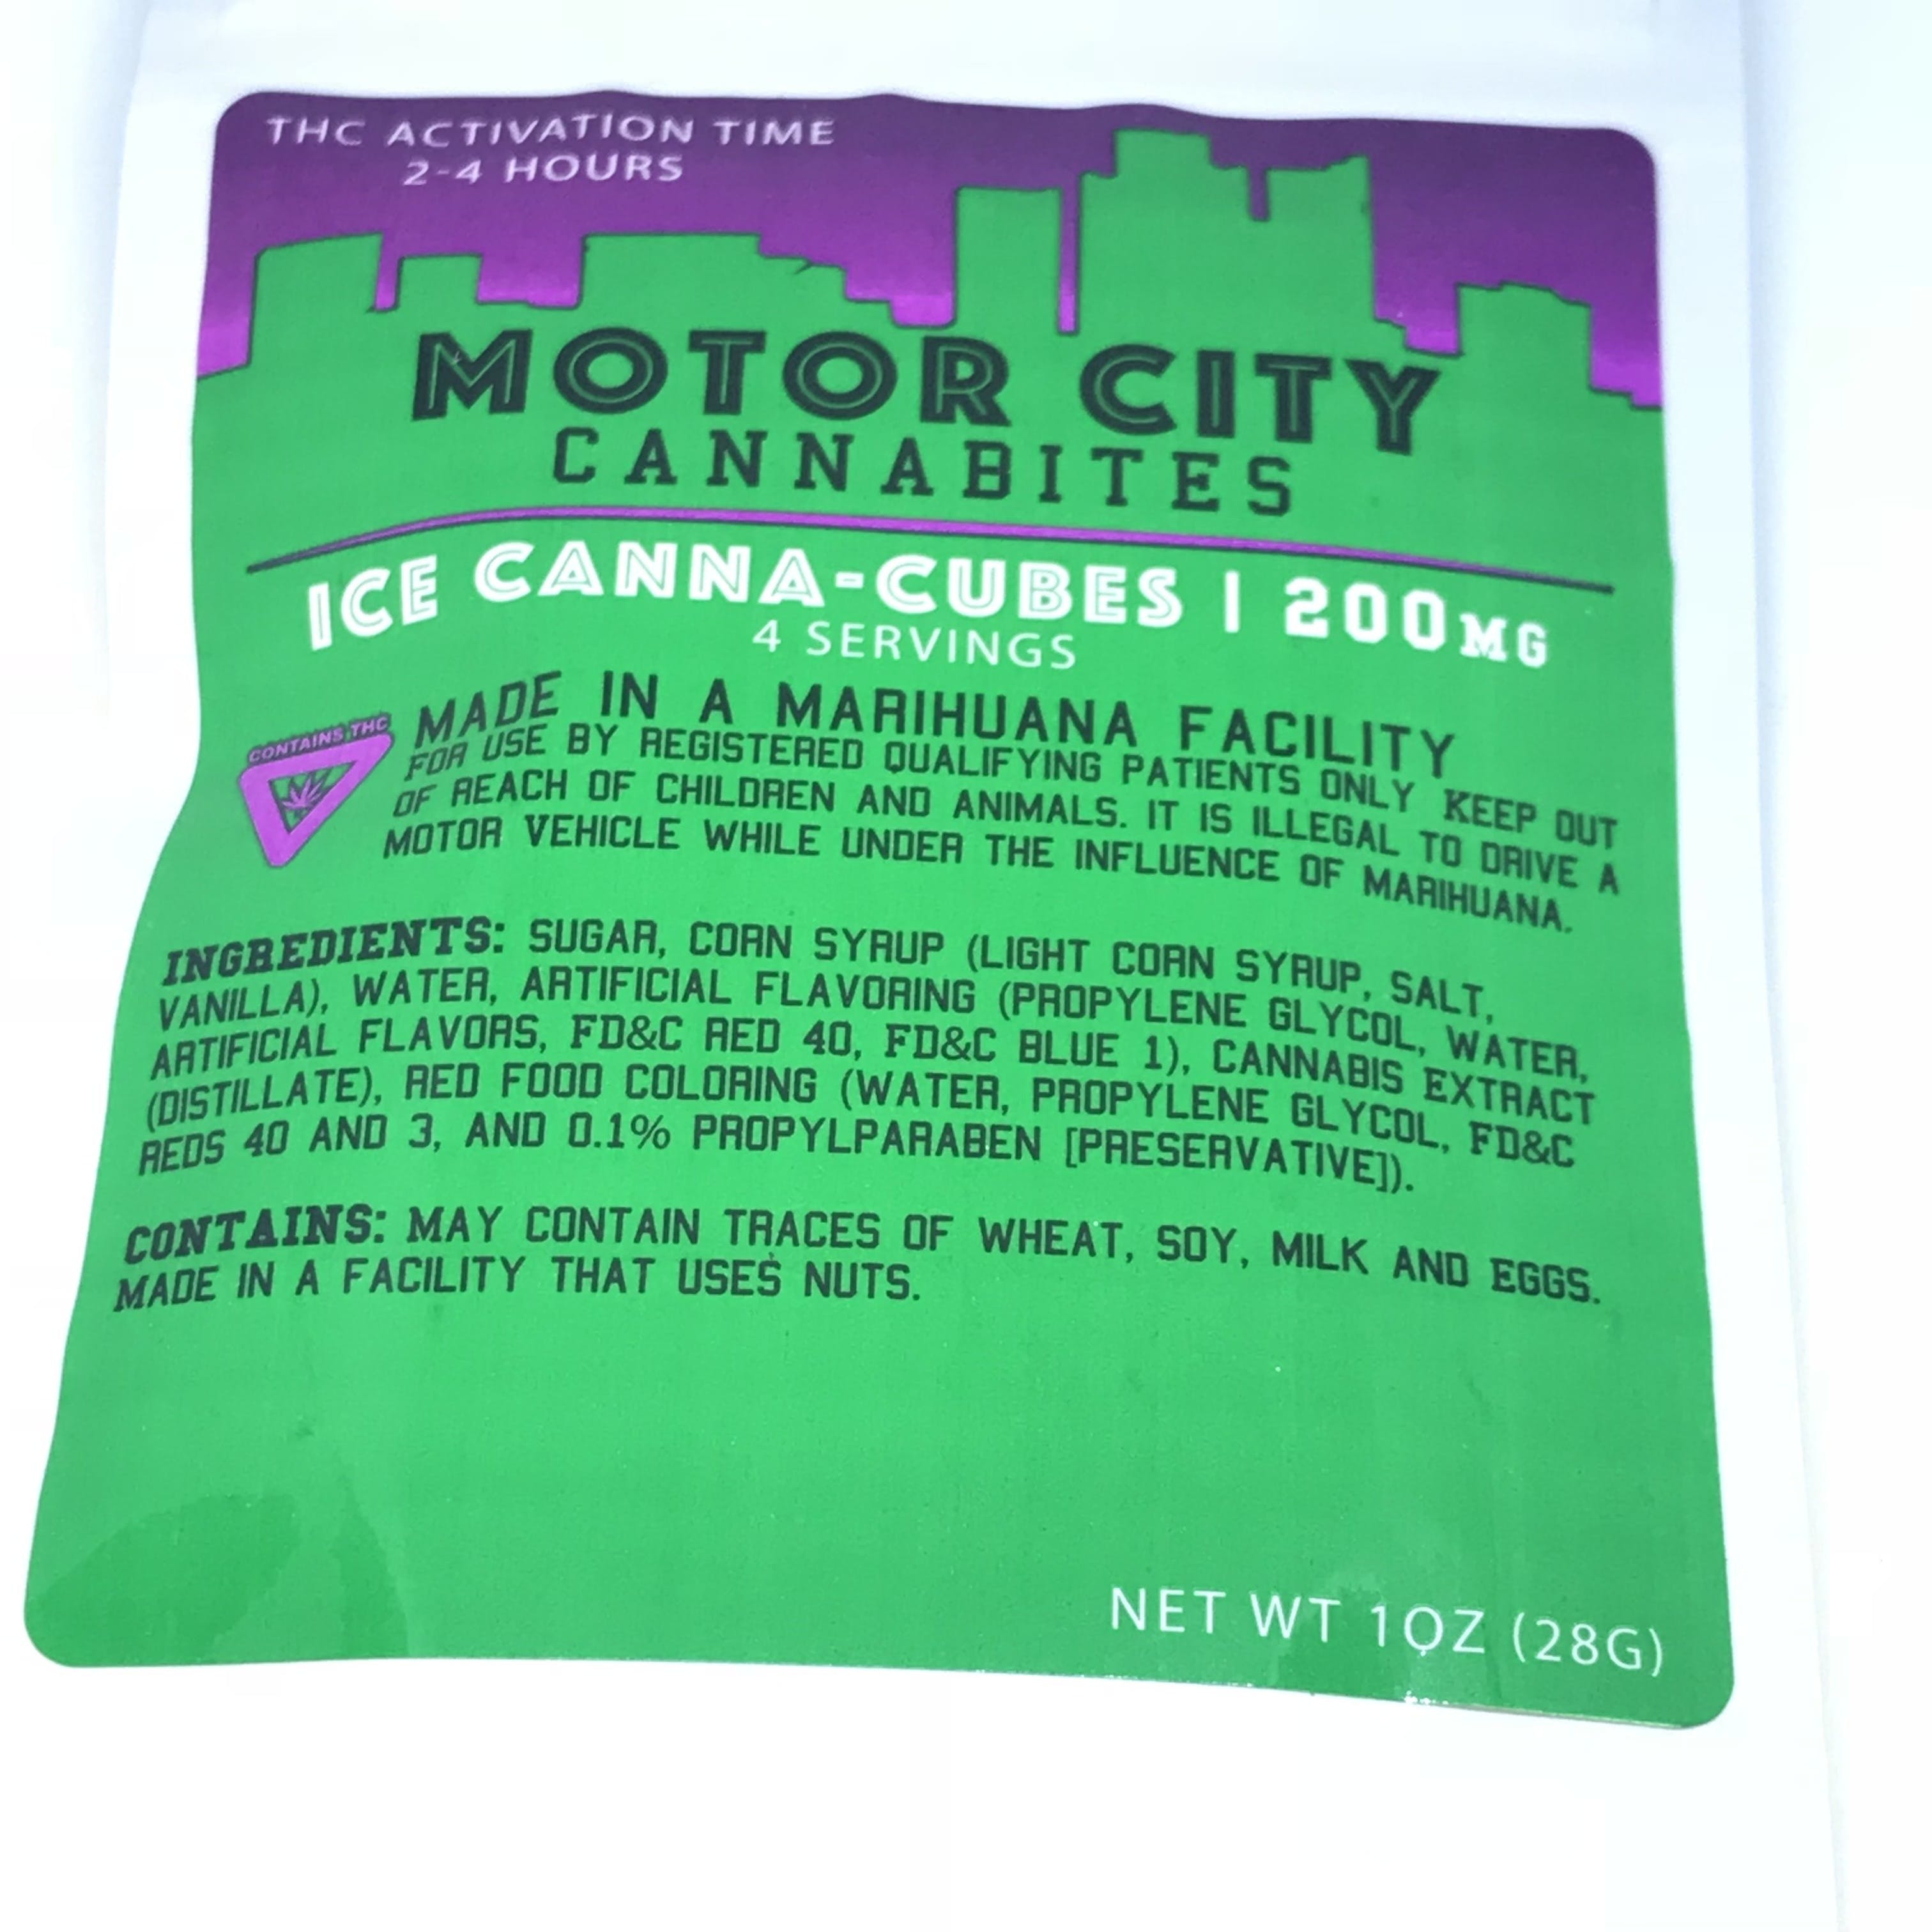 Motor city cannabites ice canna cubes 200 mg